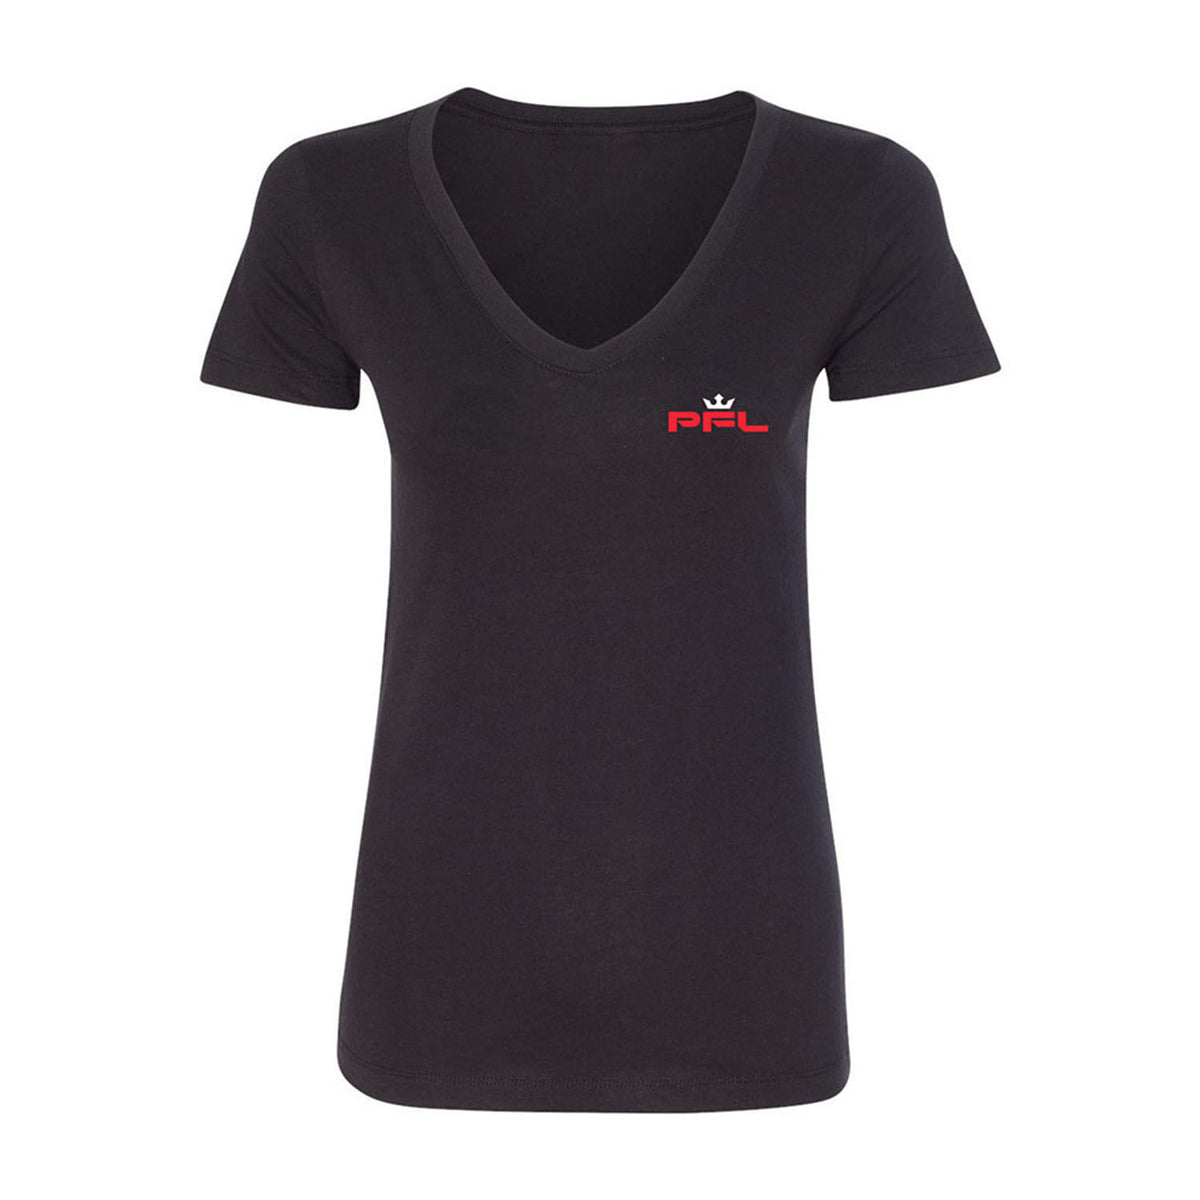 PFL Ladies Logo T-Shirt in Black - Front View